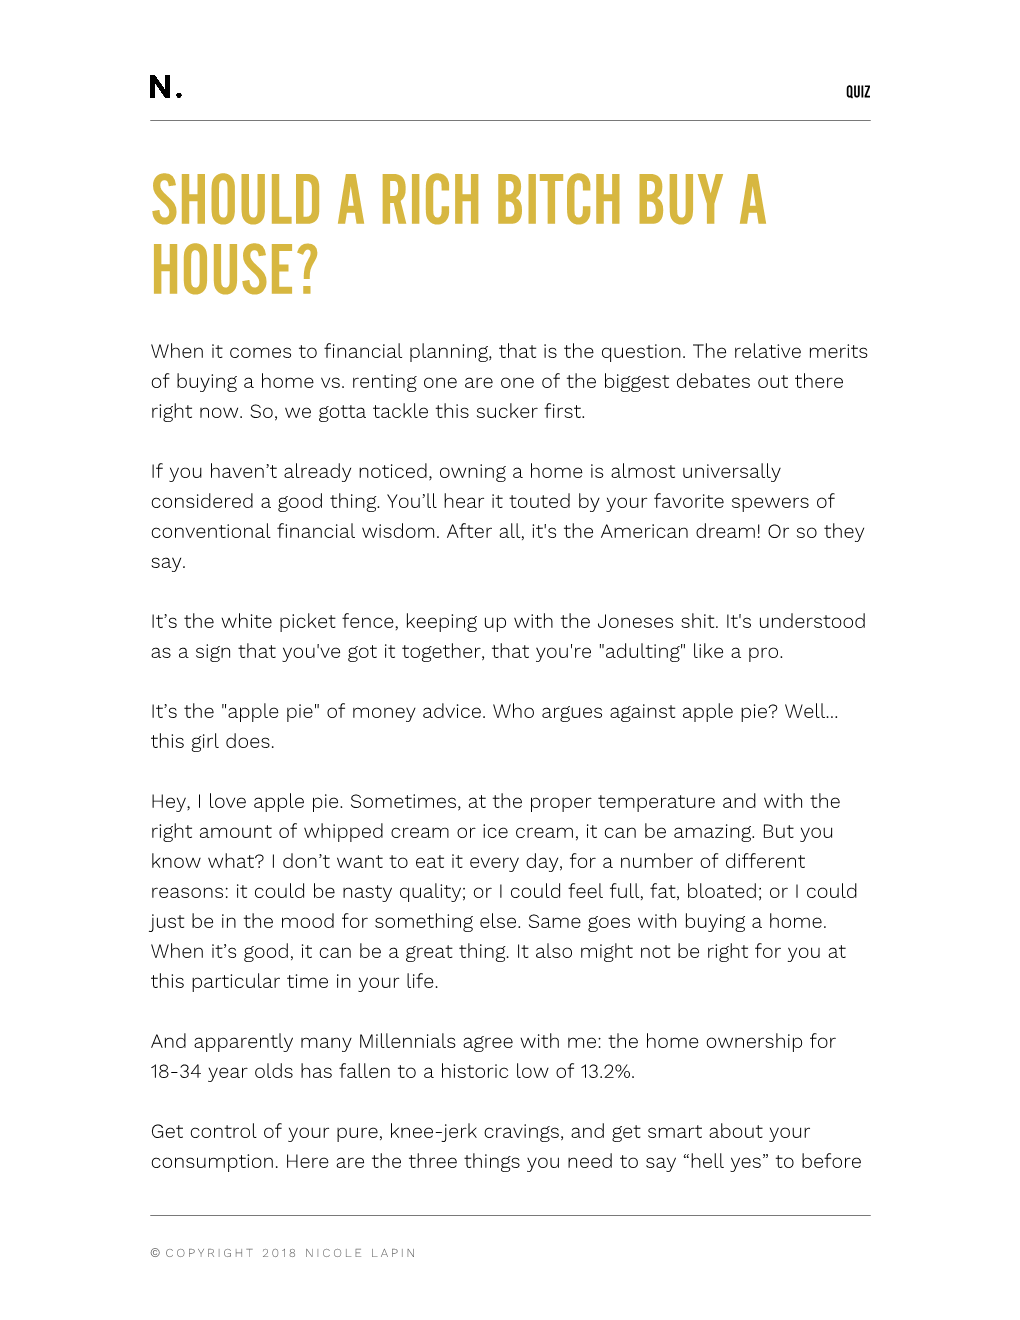 Should a Rich Bitch Buy a House?